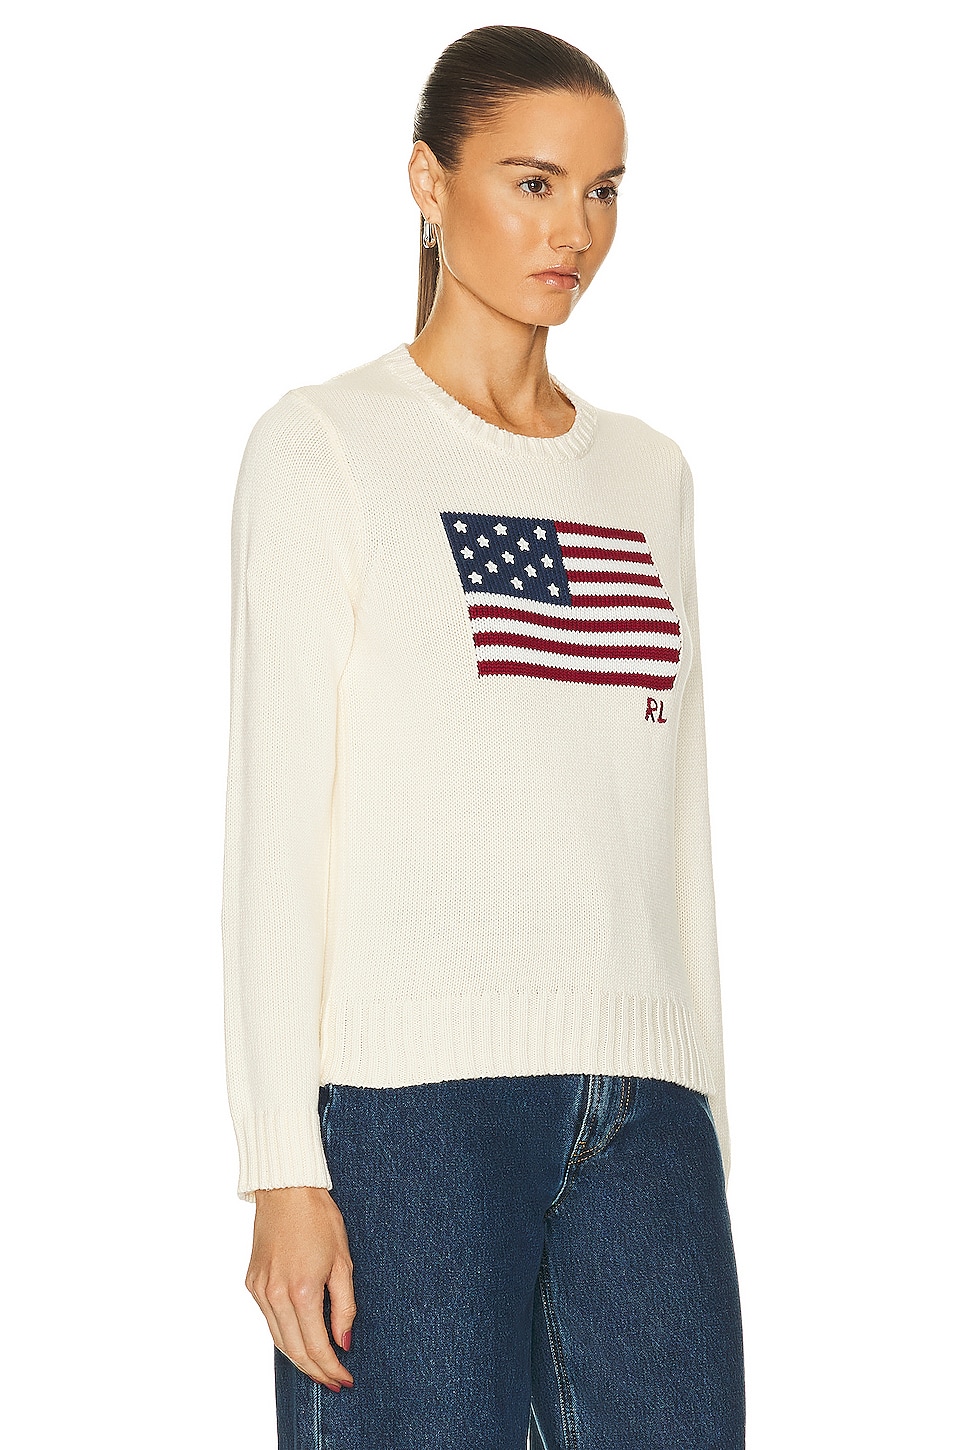 Polo Ralph Lauren Flag Long Sleeve Pullover Sweater in Cream | FWRD